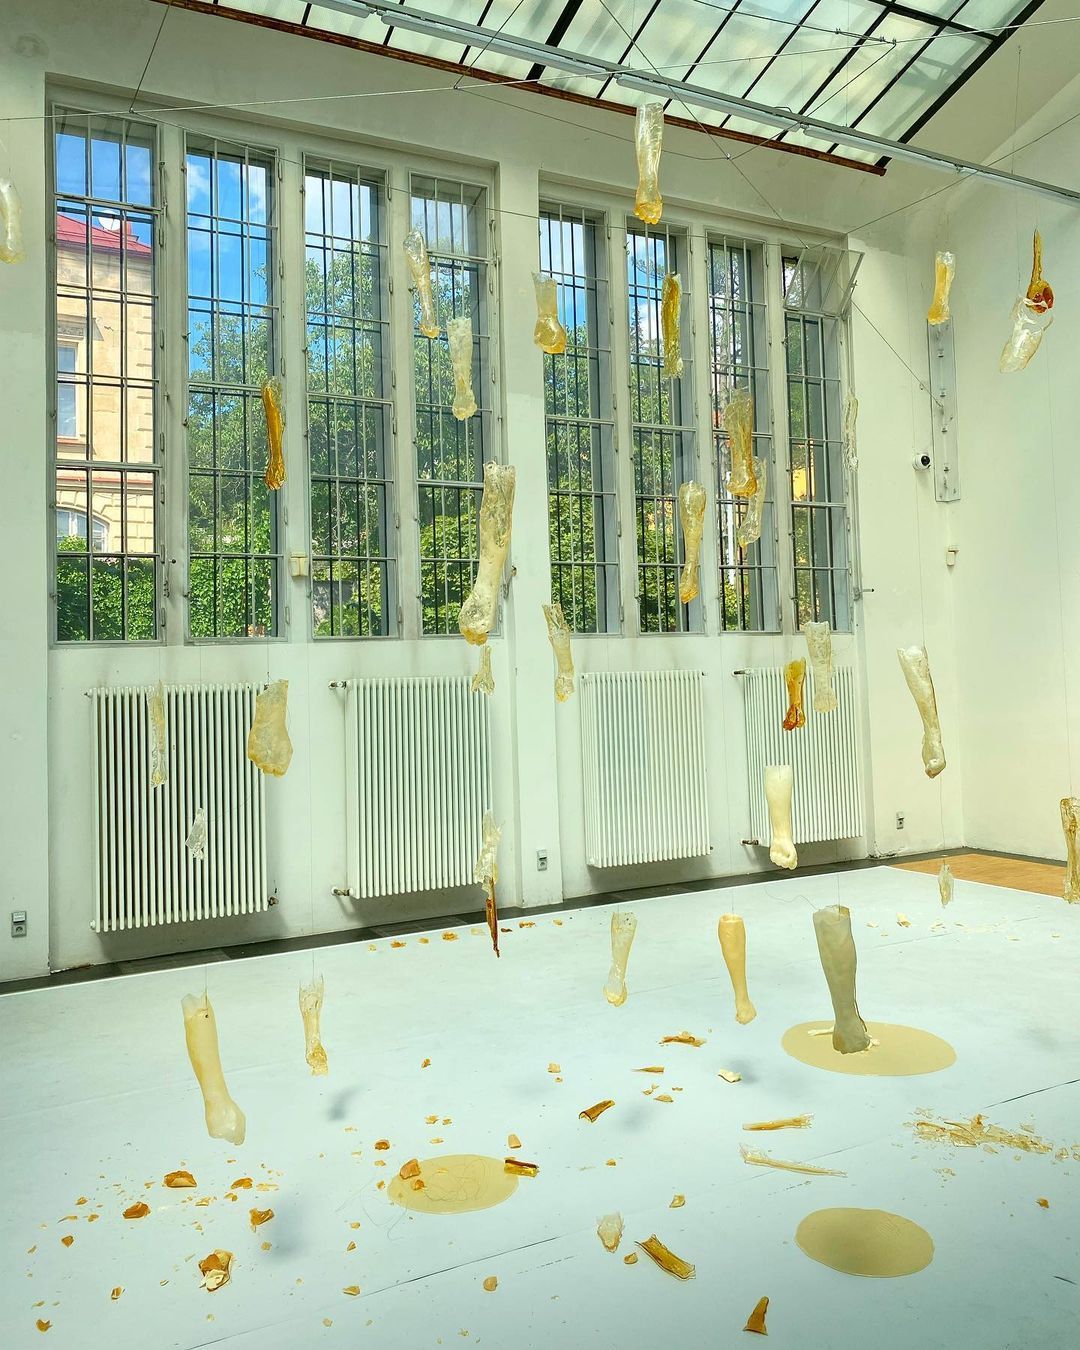 Praha. Contemporary art.
@praguebiennale
https://www.instagram.com/p/Cgrb6UZqNwQ/?igshid=NGJjMDIxMWI=